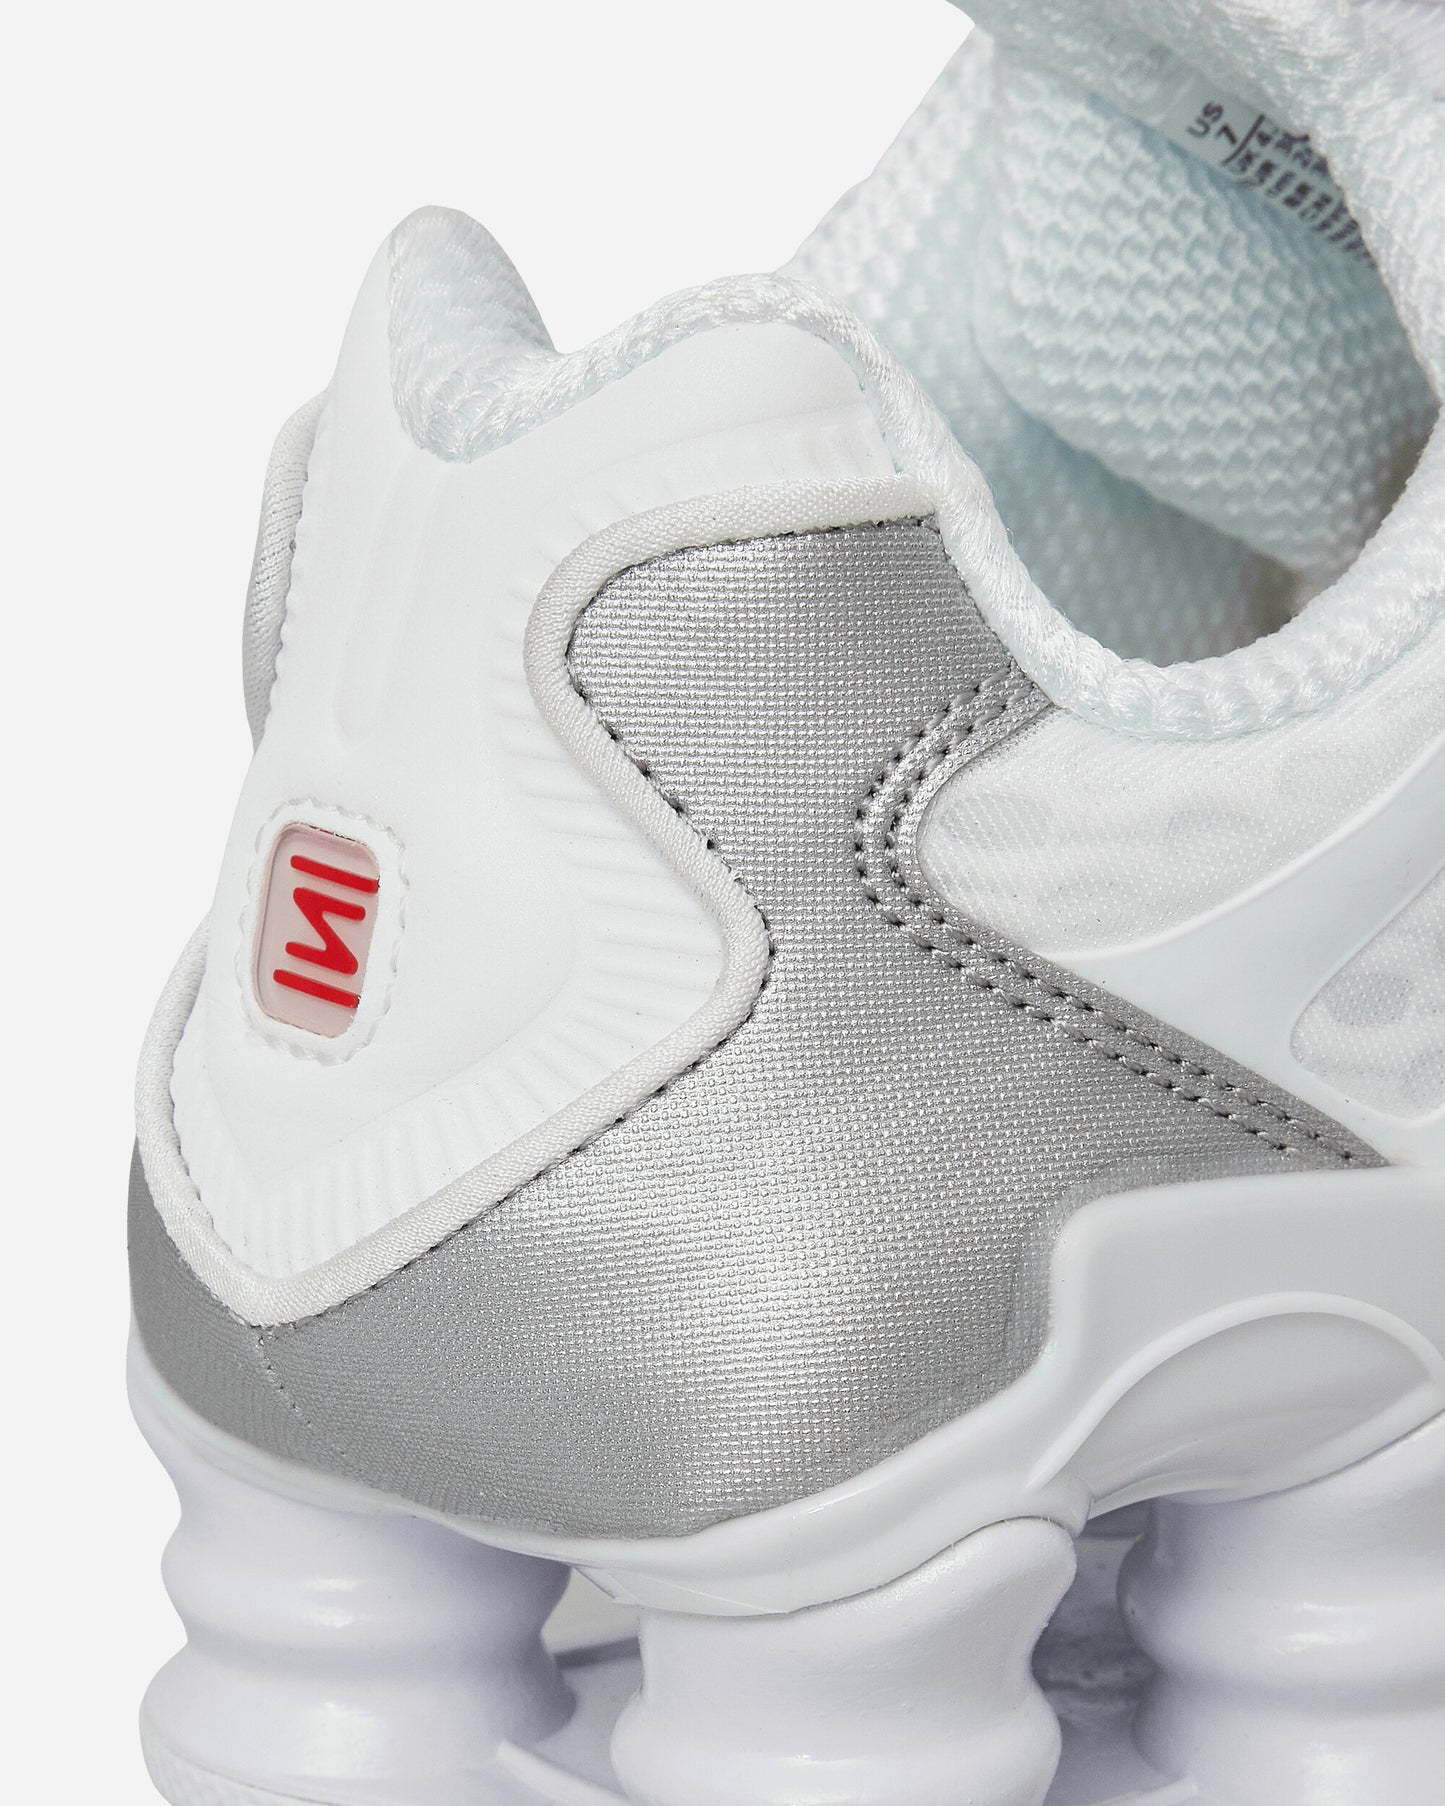 Nike Wmns W Nike Shox Tl White/Metallic Silver Sneakers Low AR3566-100